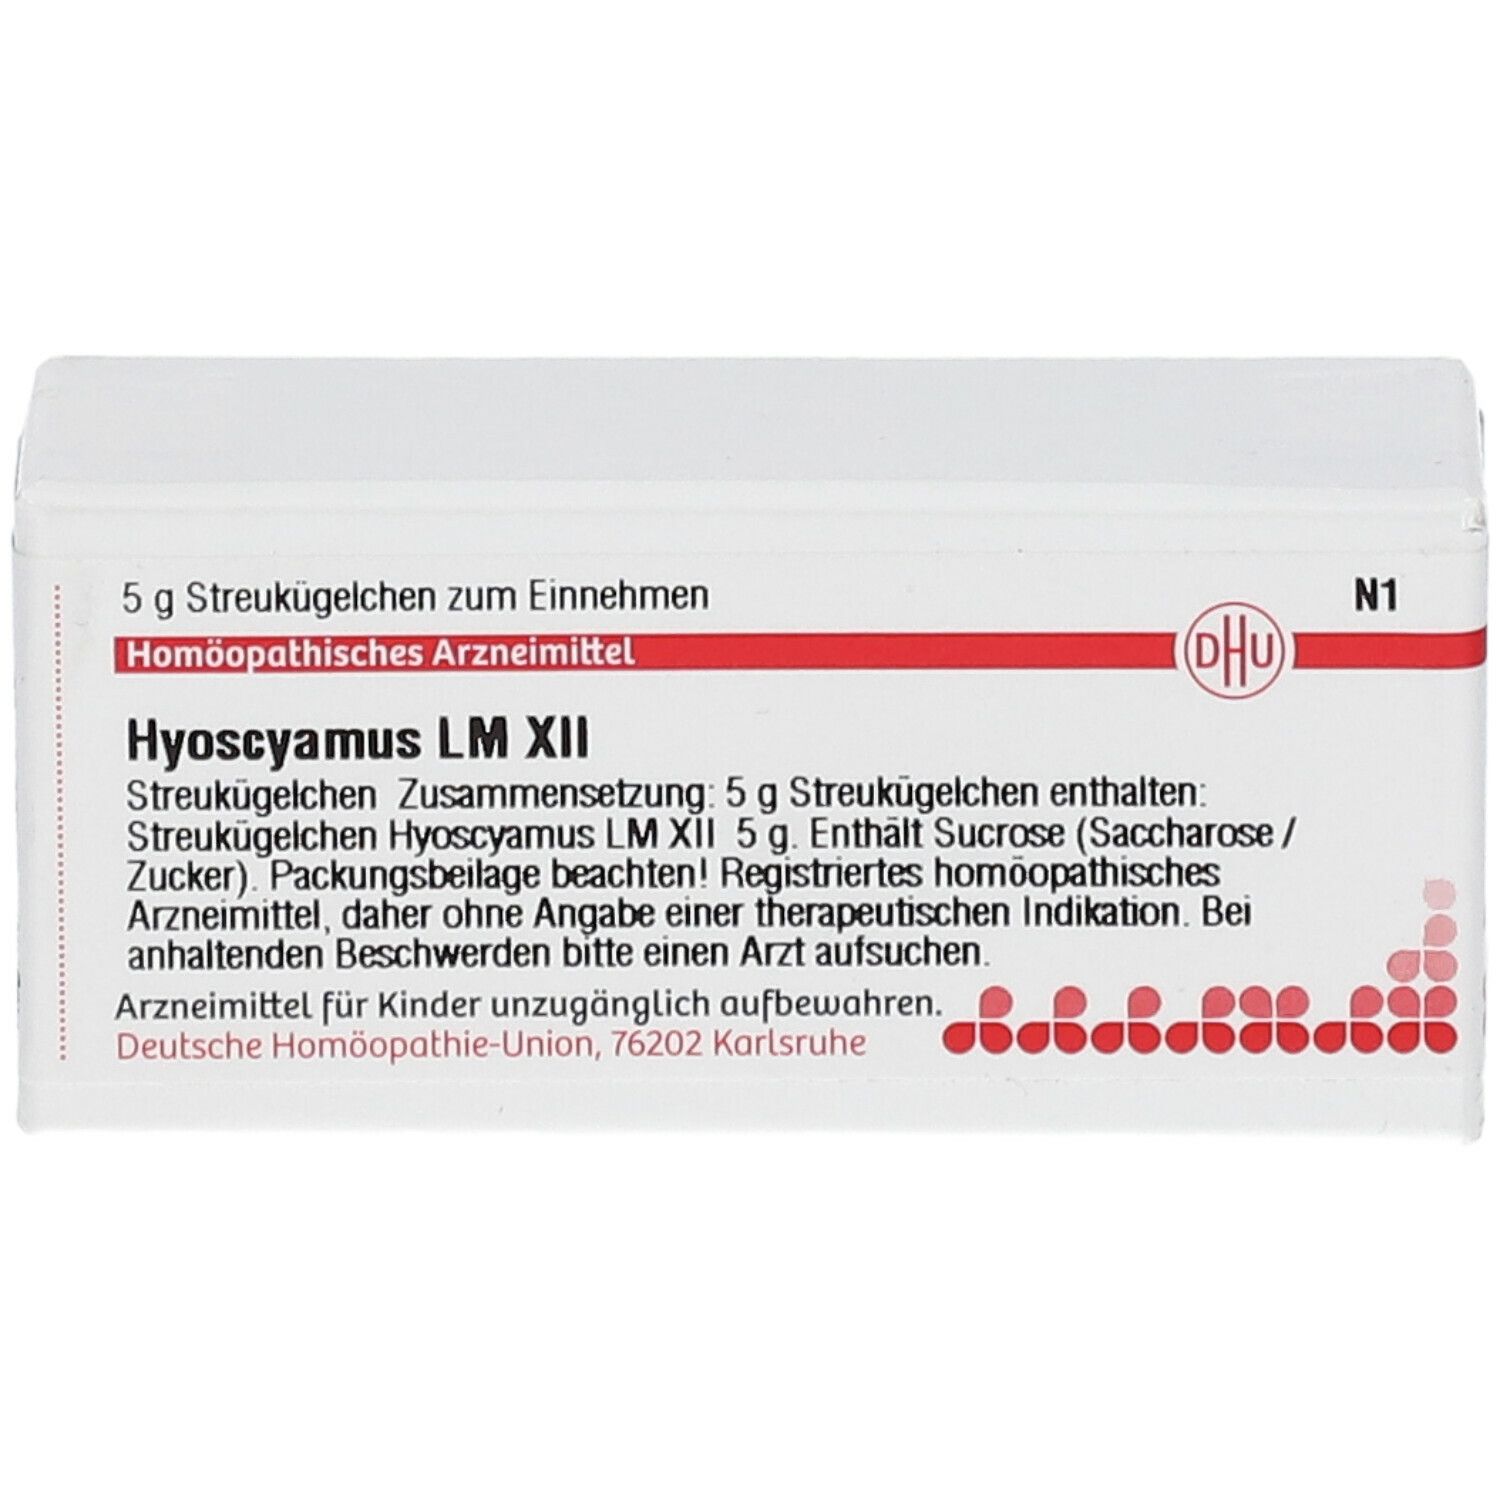 DHU Hyoscyamus LM XII